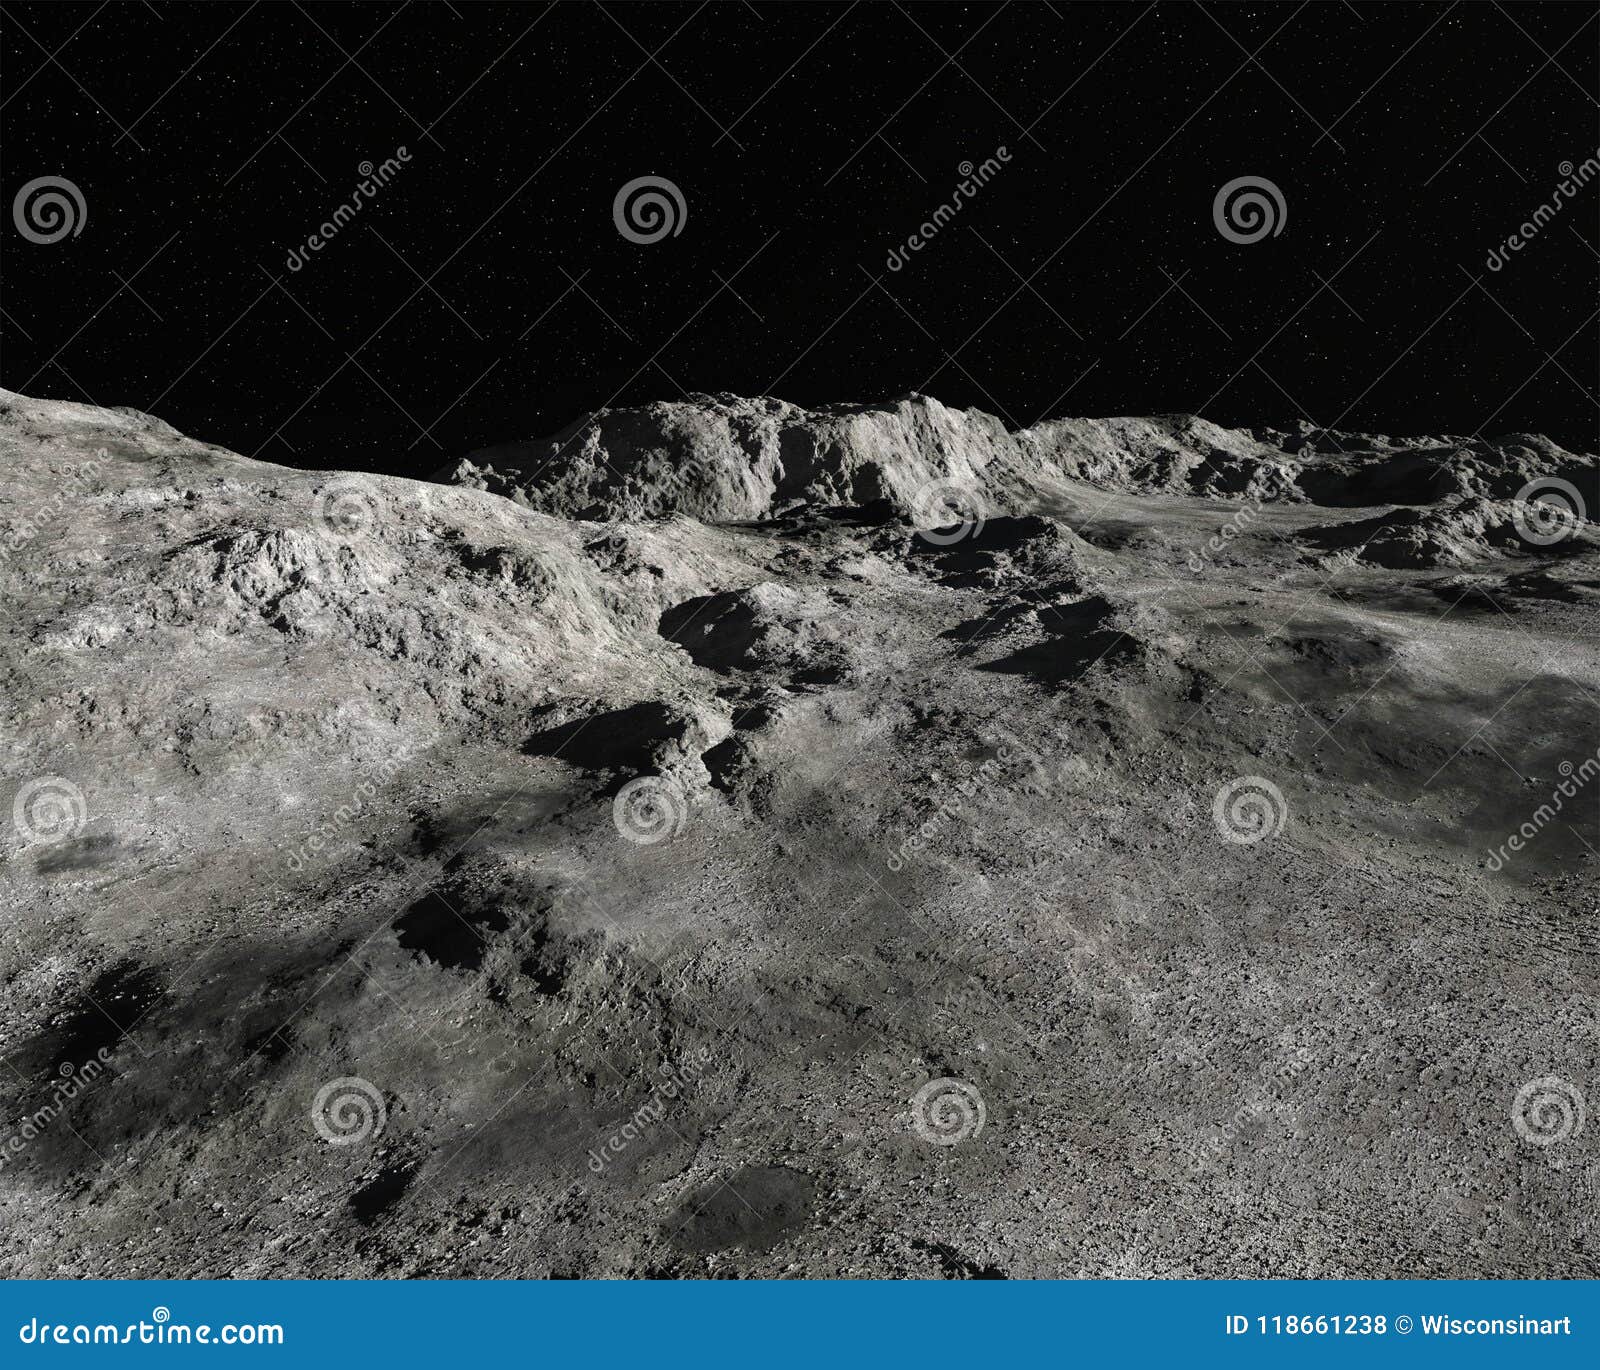 moon lunar landscape rocky background